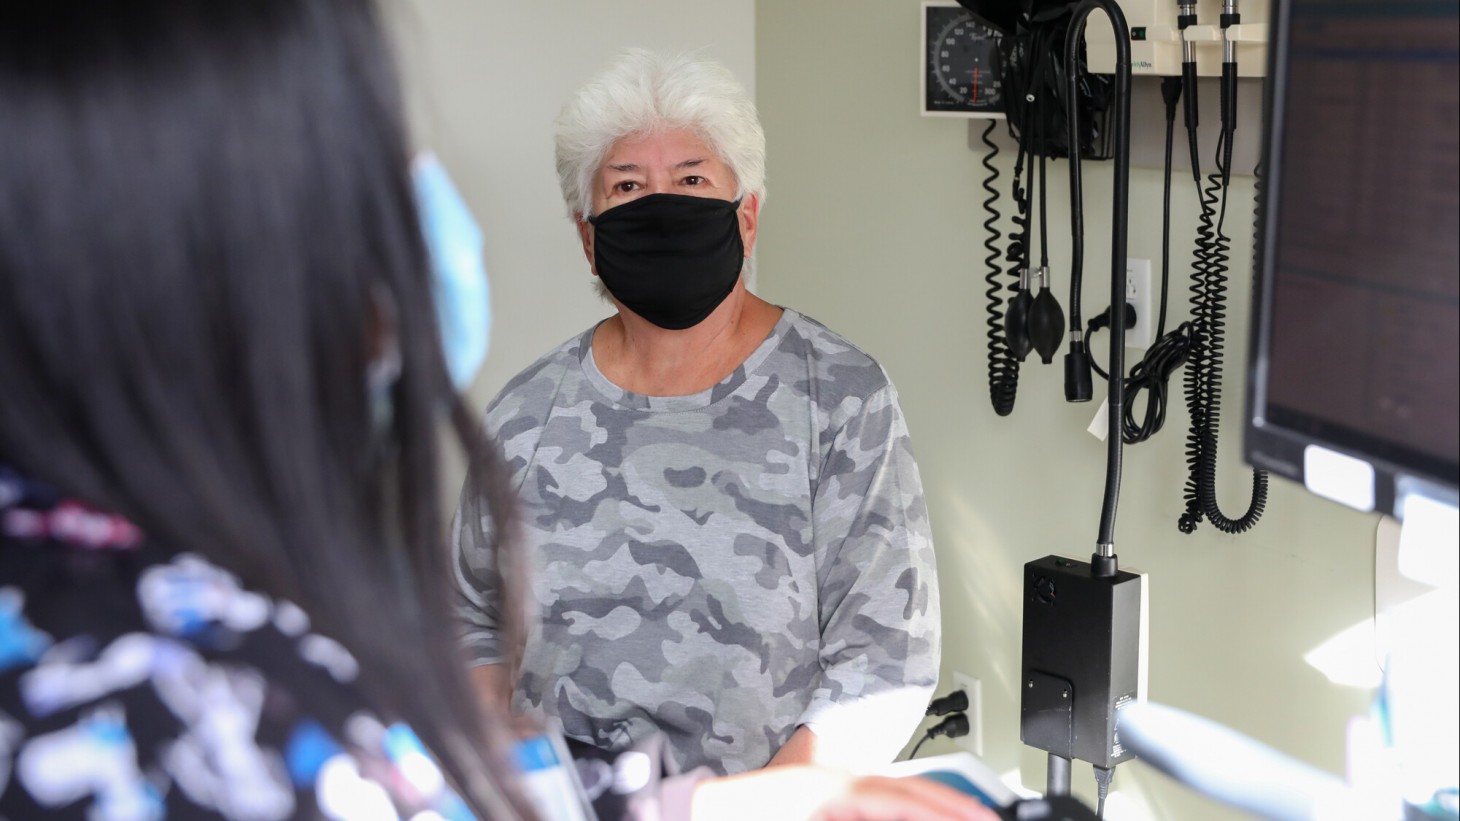 Elderly female patient in a doctor's office, wearing a mask